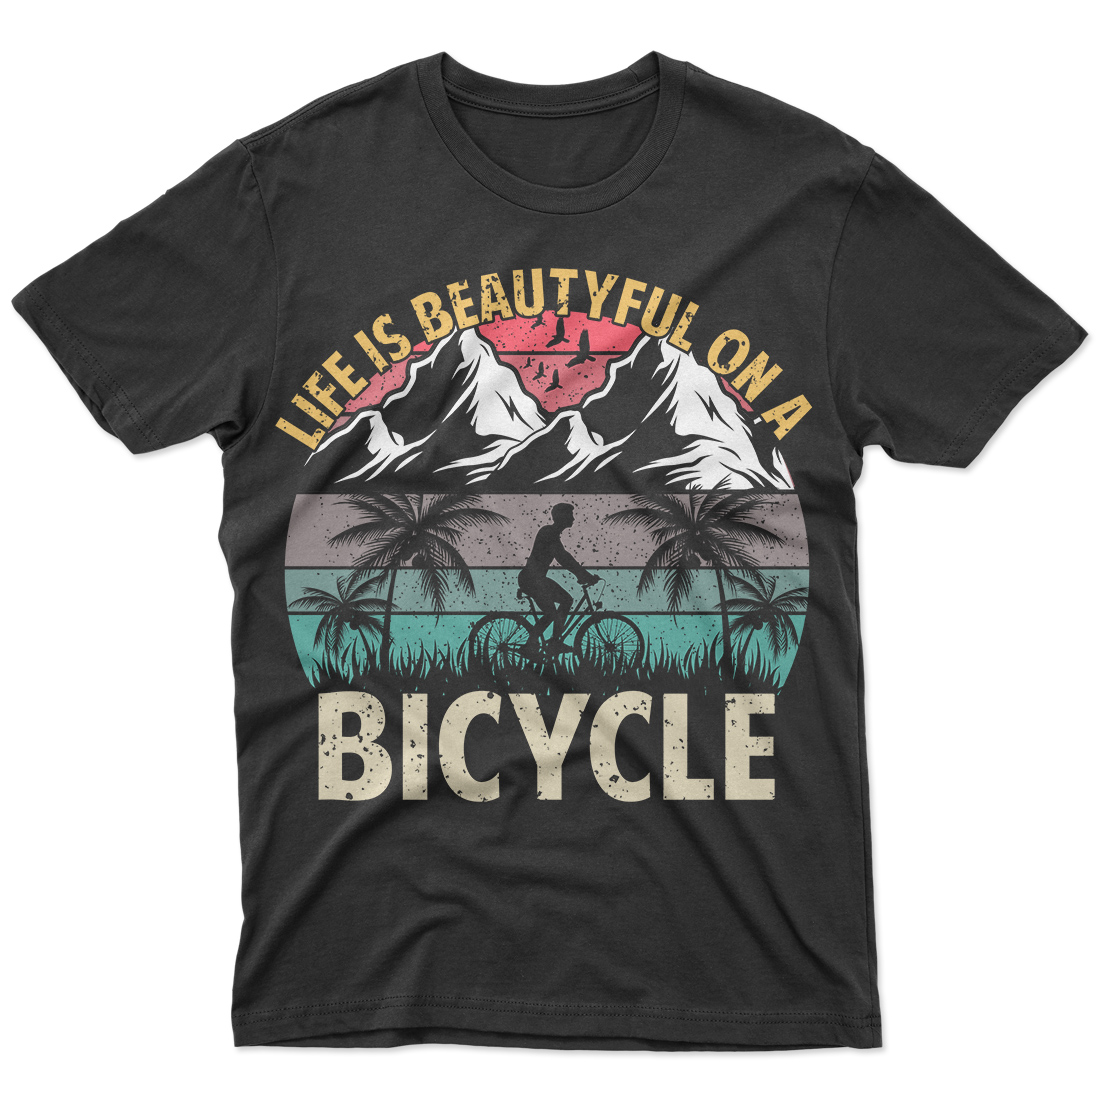 bike, bicycle, vintage t-shirt design cover image.